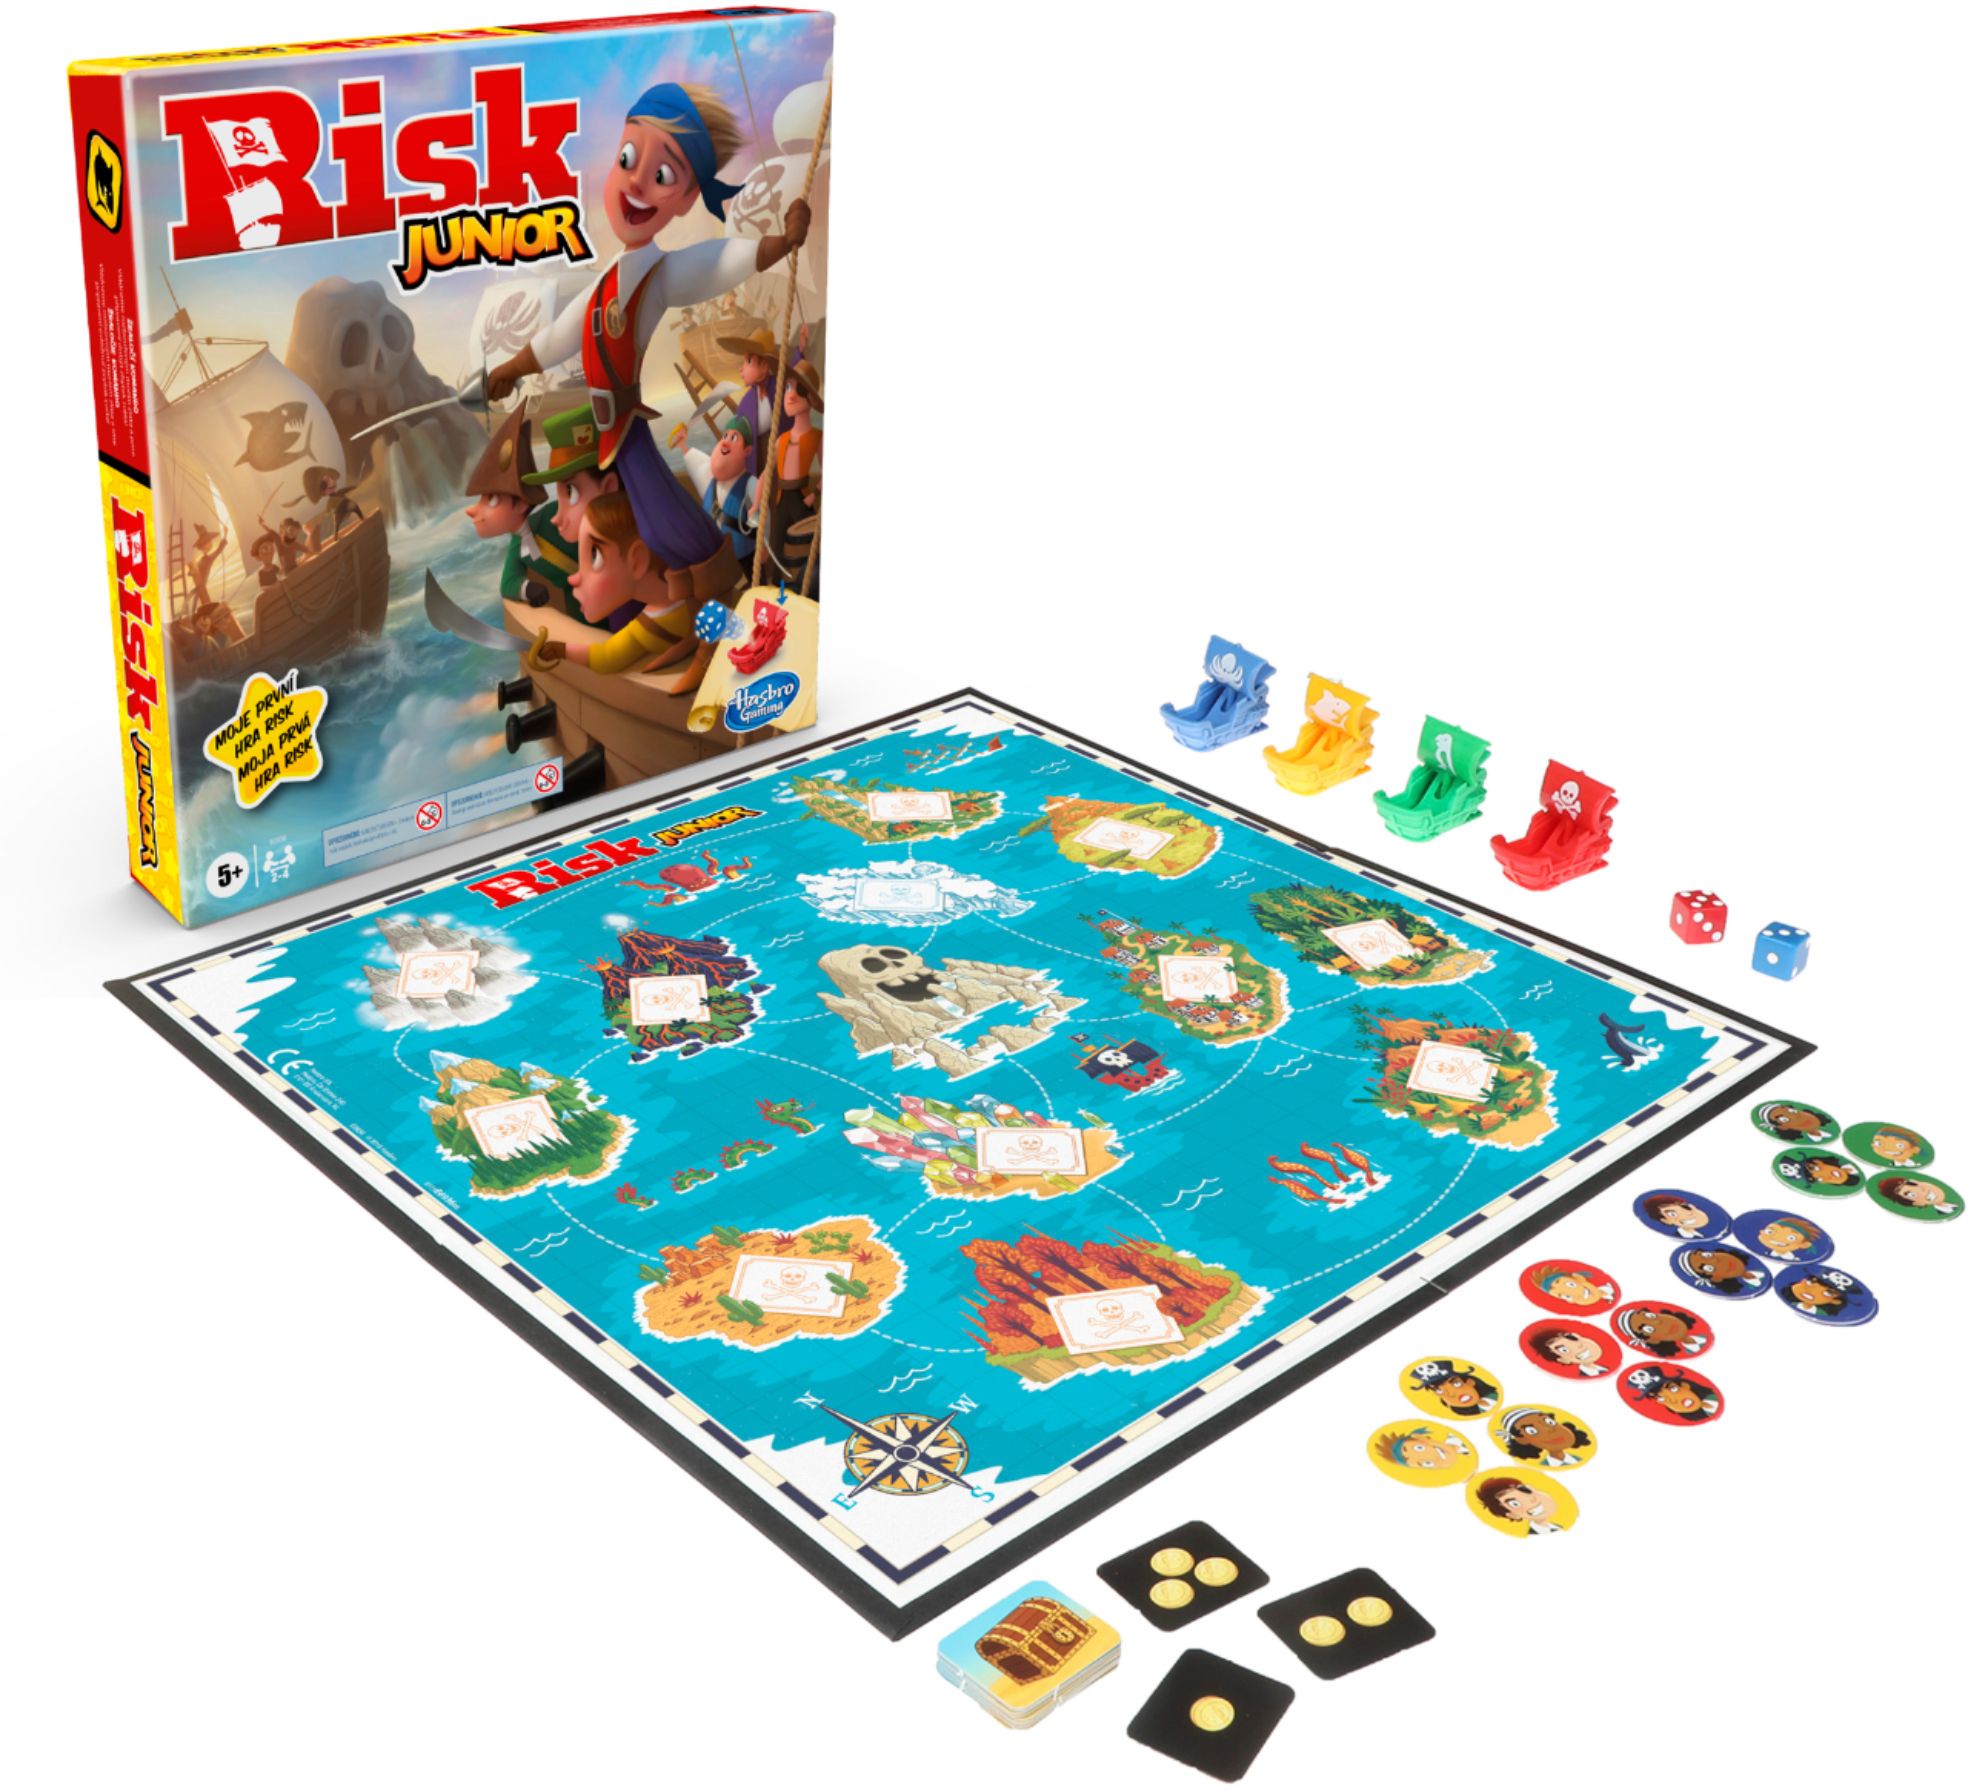 Hasbro Risk Board Game for sale online